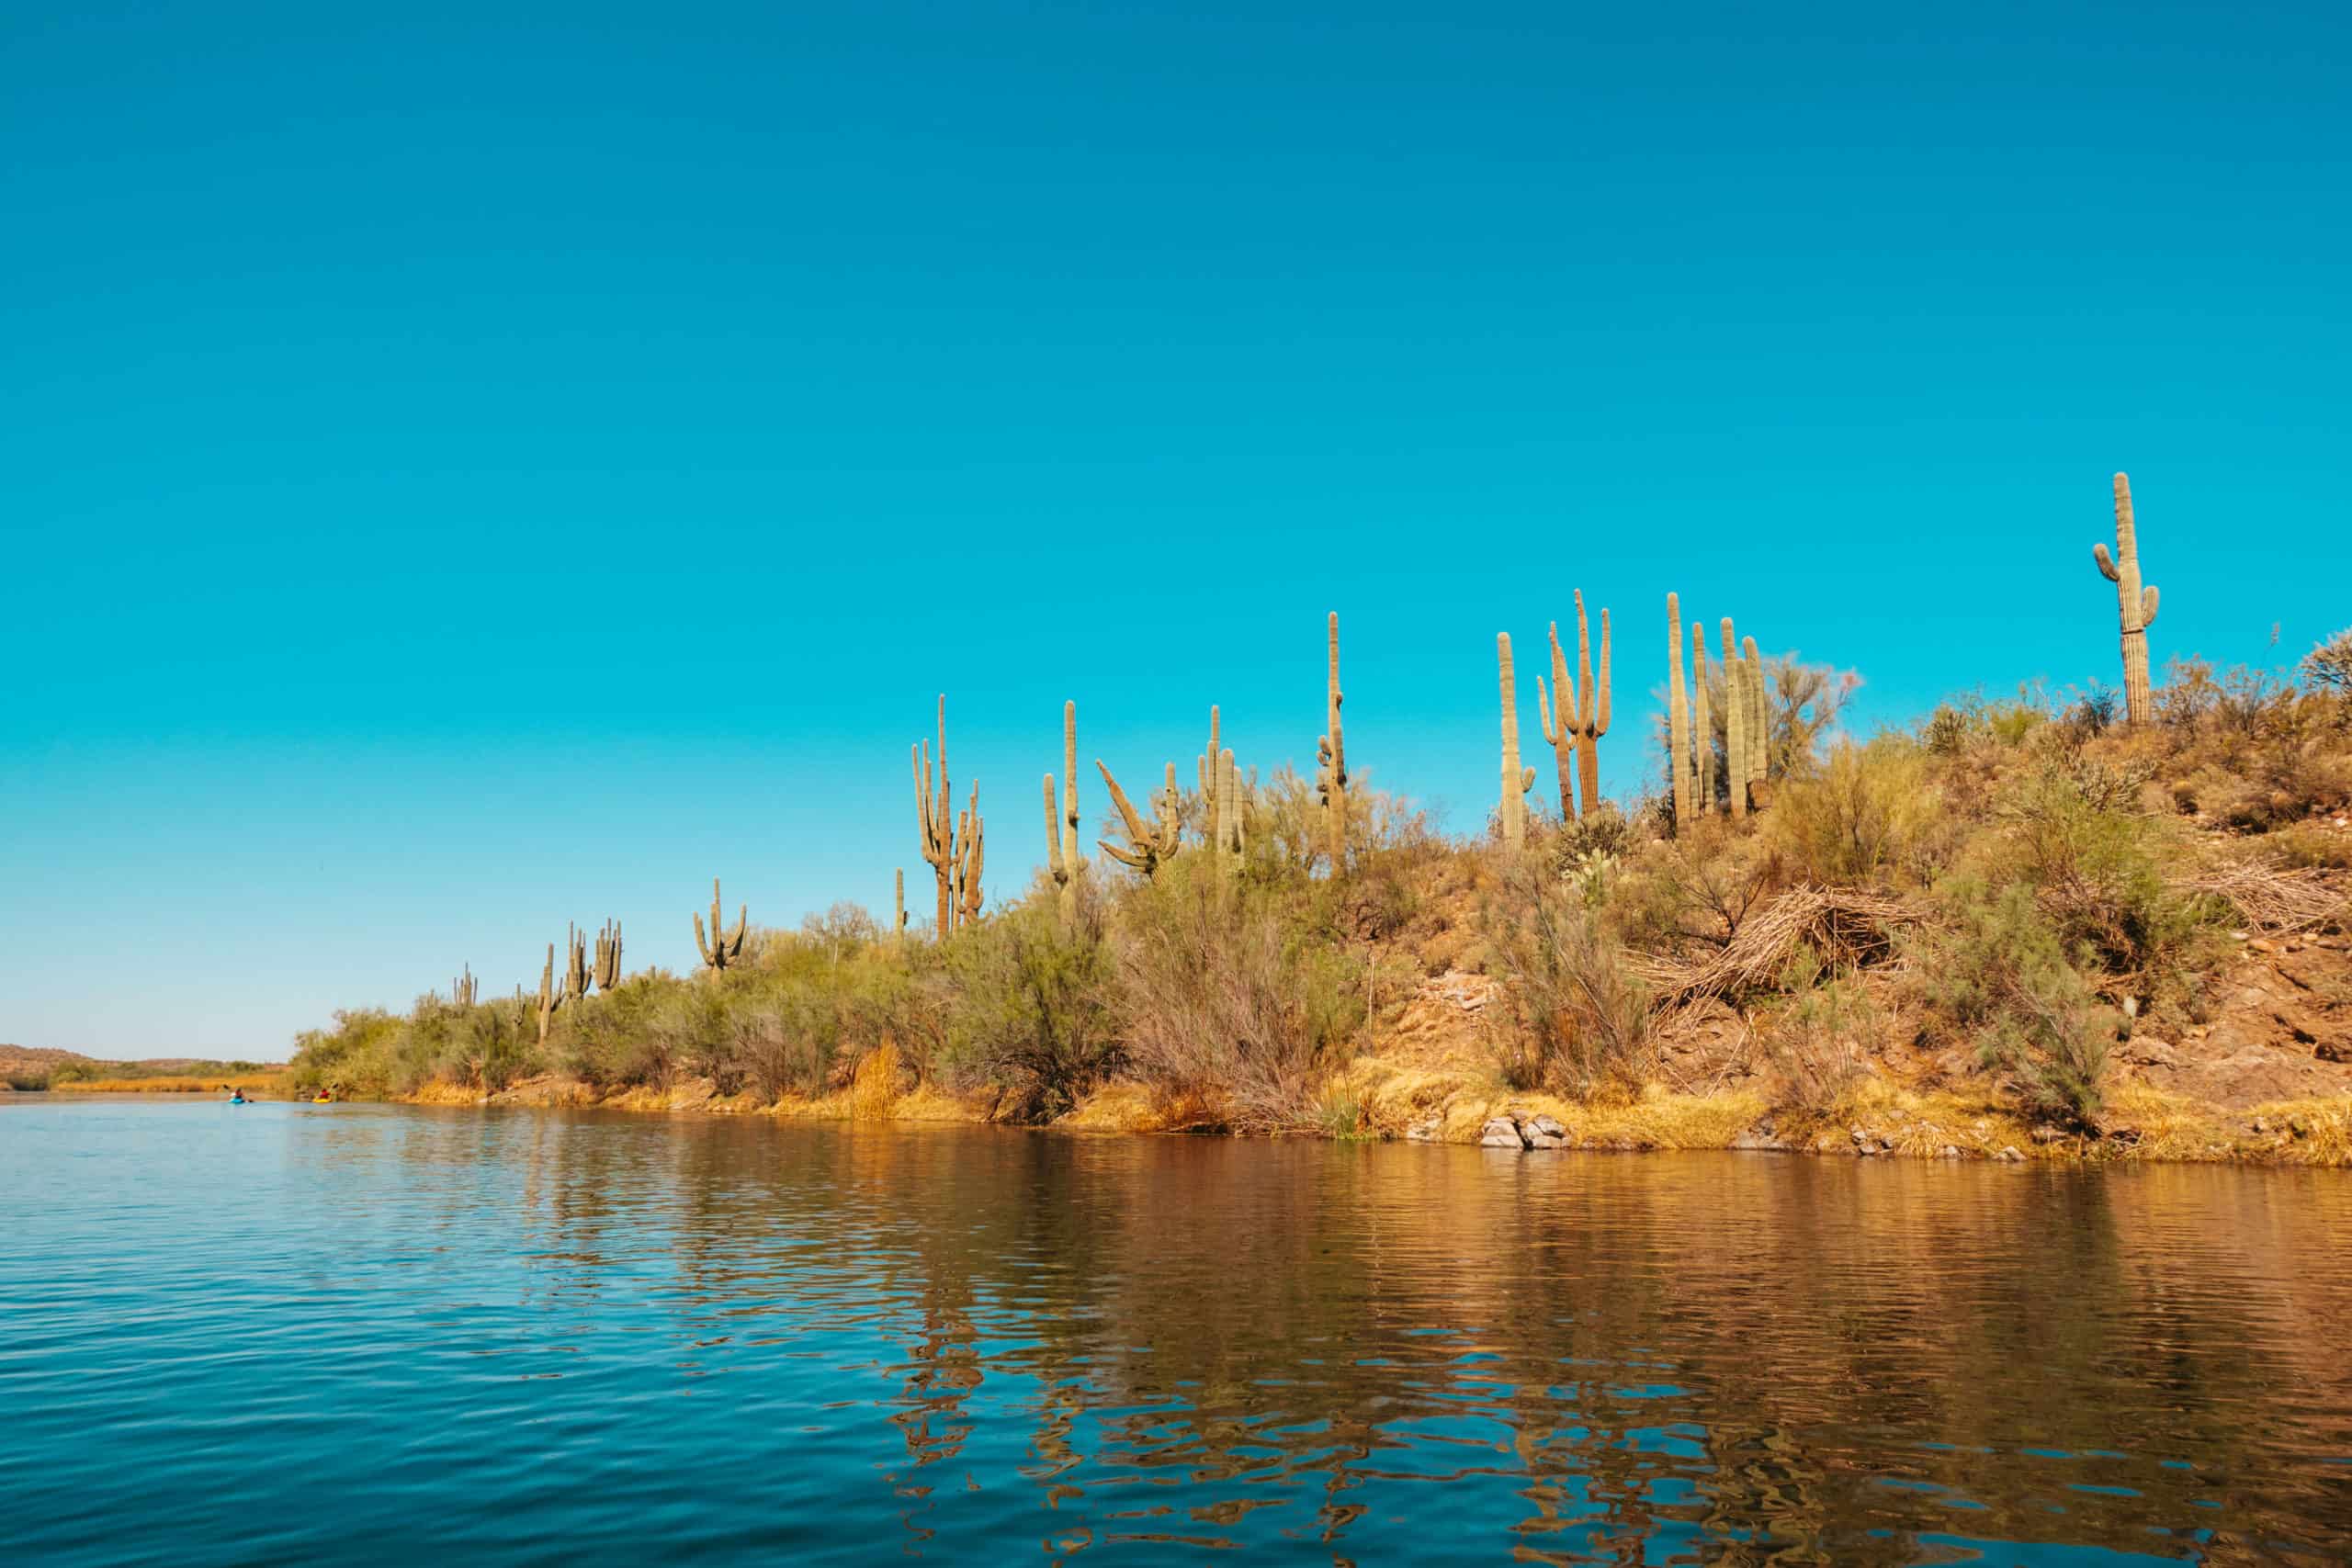 Saguaro cacti seen from the Salt River in Phoenix, Arizona